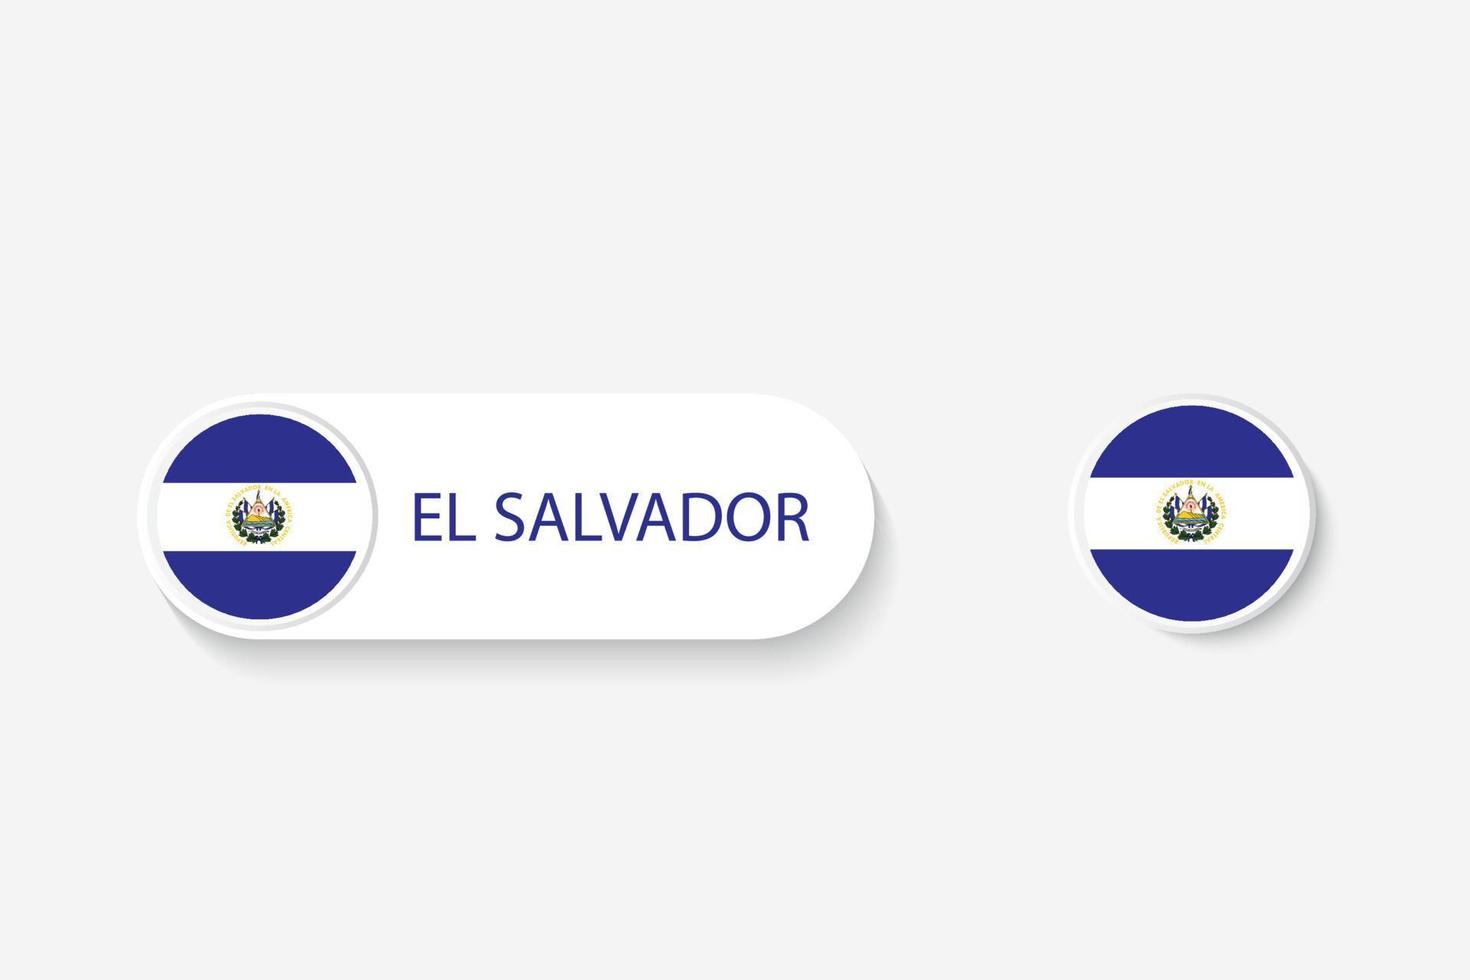 El Salvador button flag in illustration of oval shaped with word of El Salvador. And button flag El Salvador. vector